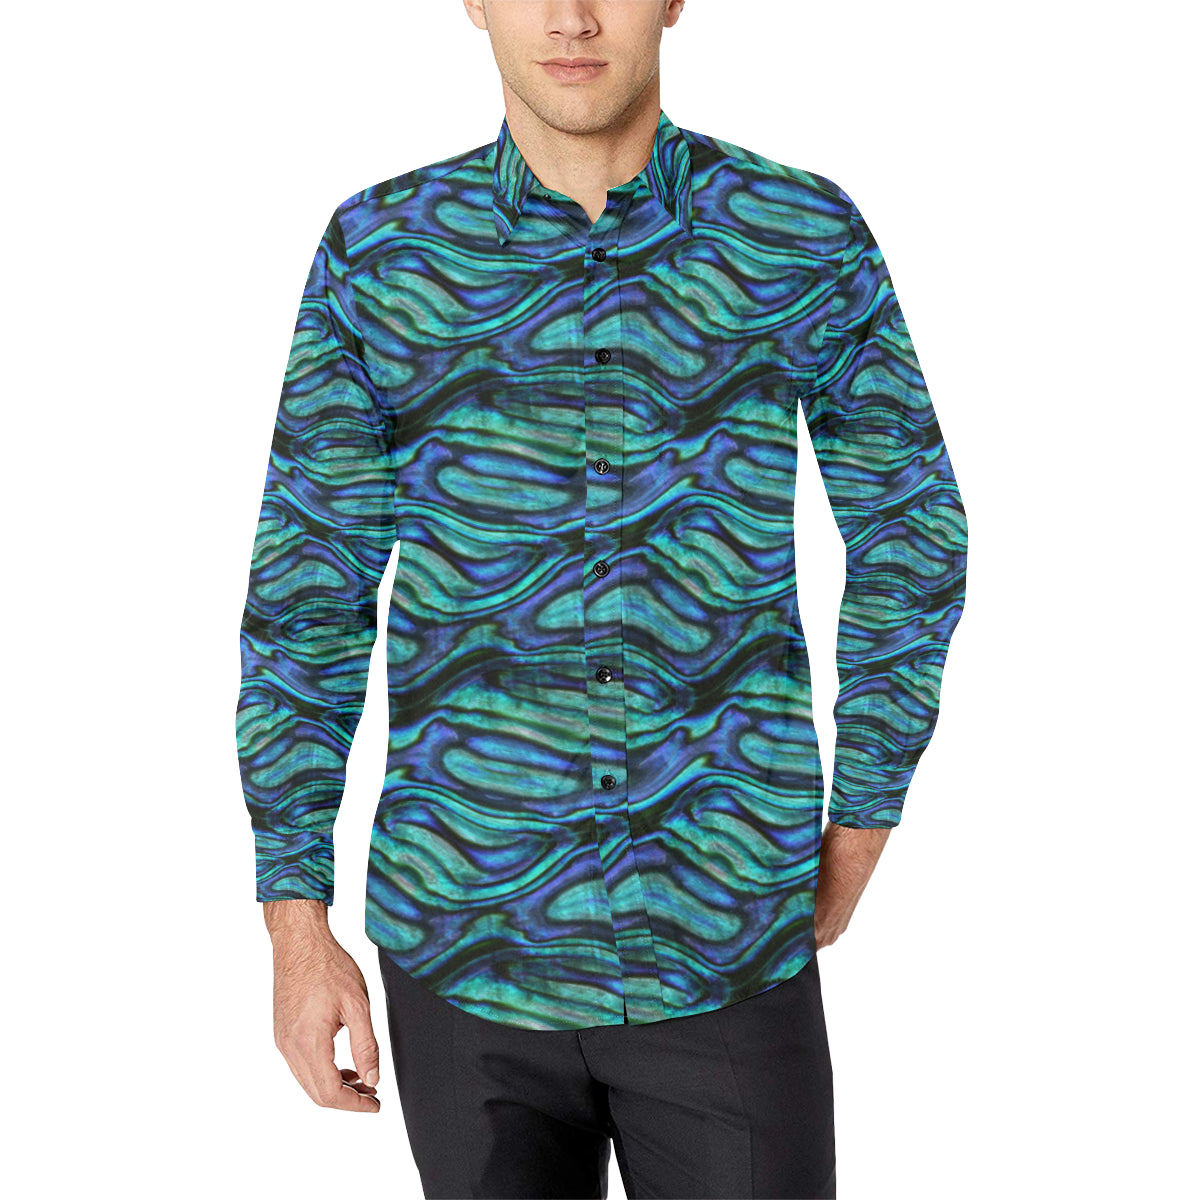 Abalone Pattern Print Design 02 Men's Long Sleeve Shirt